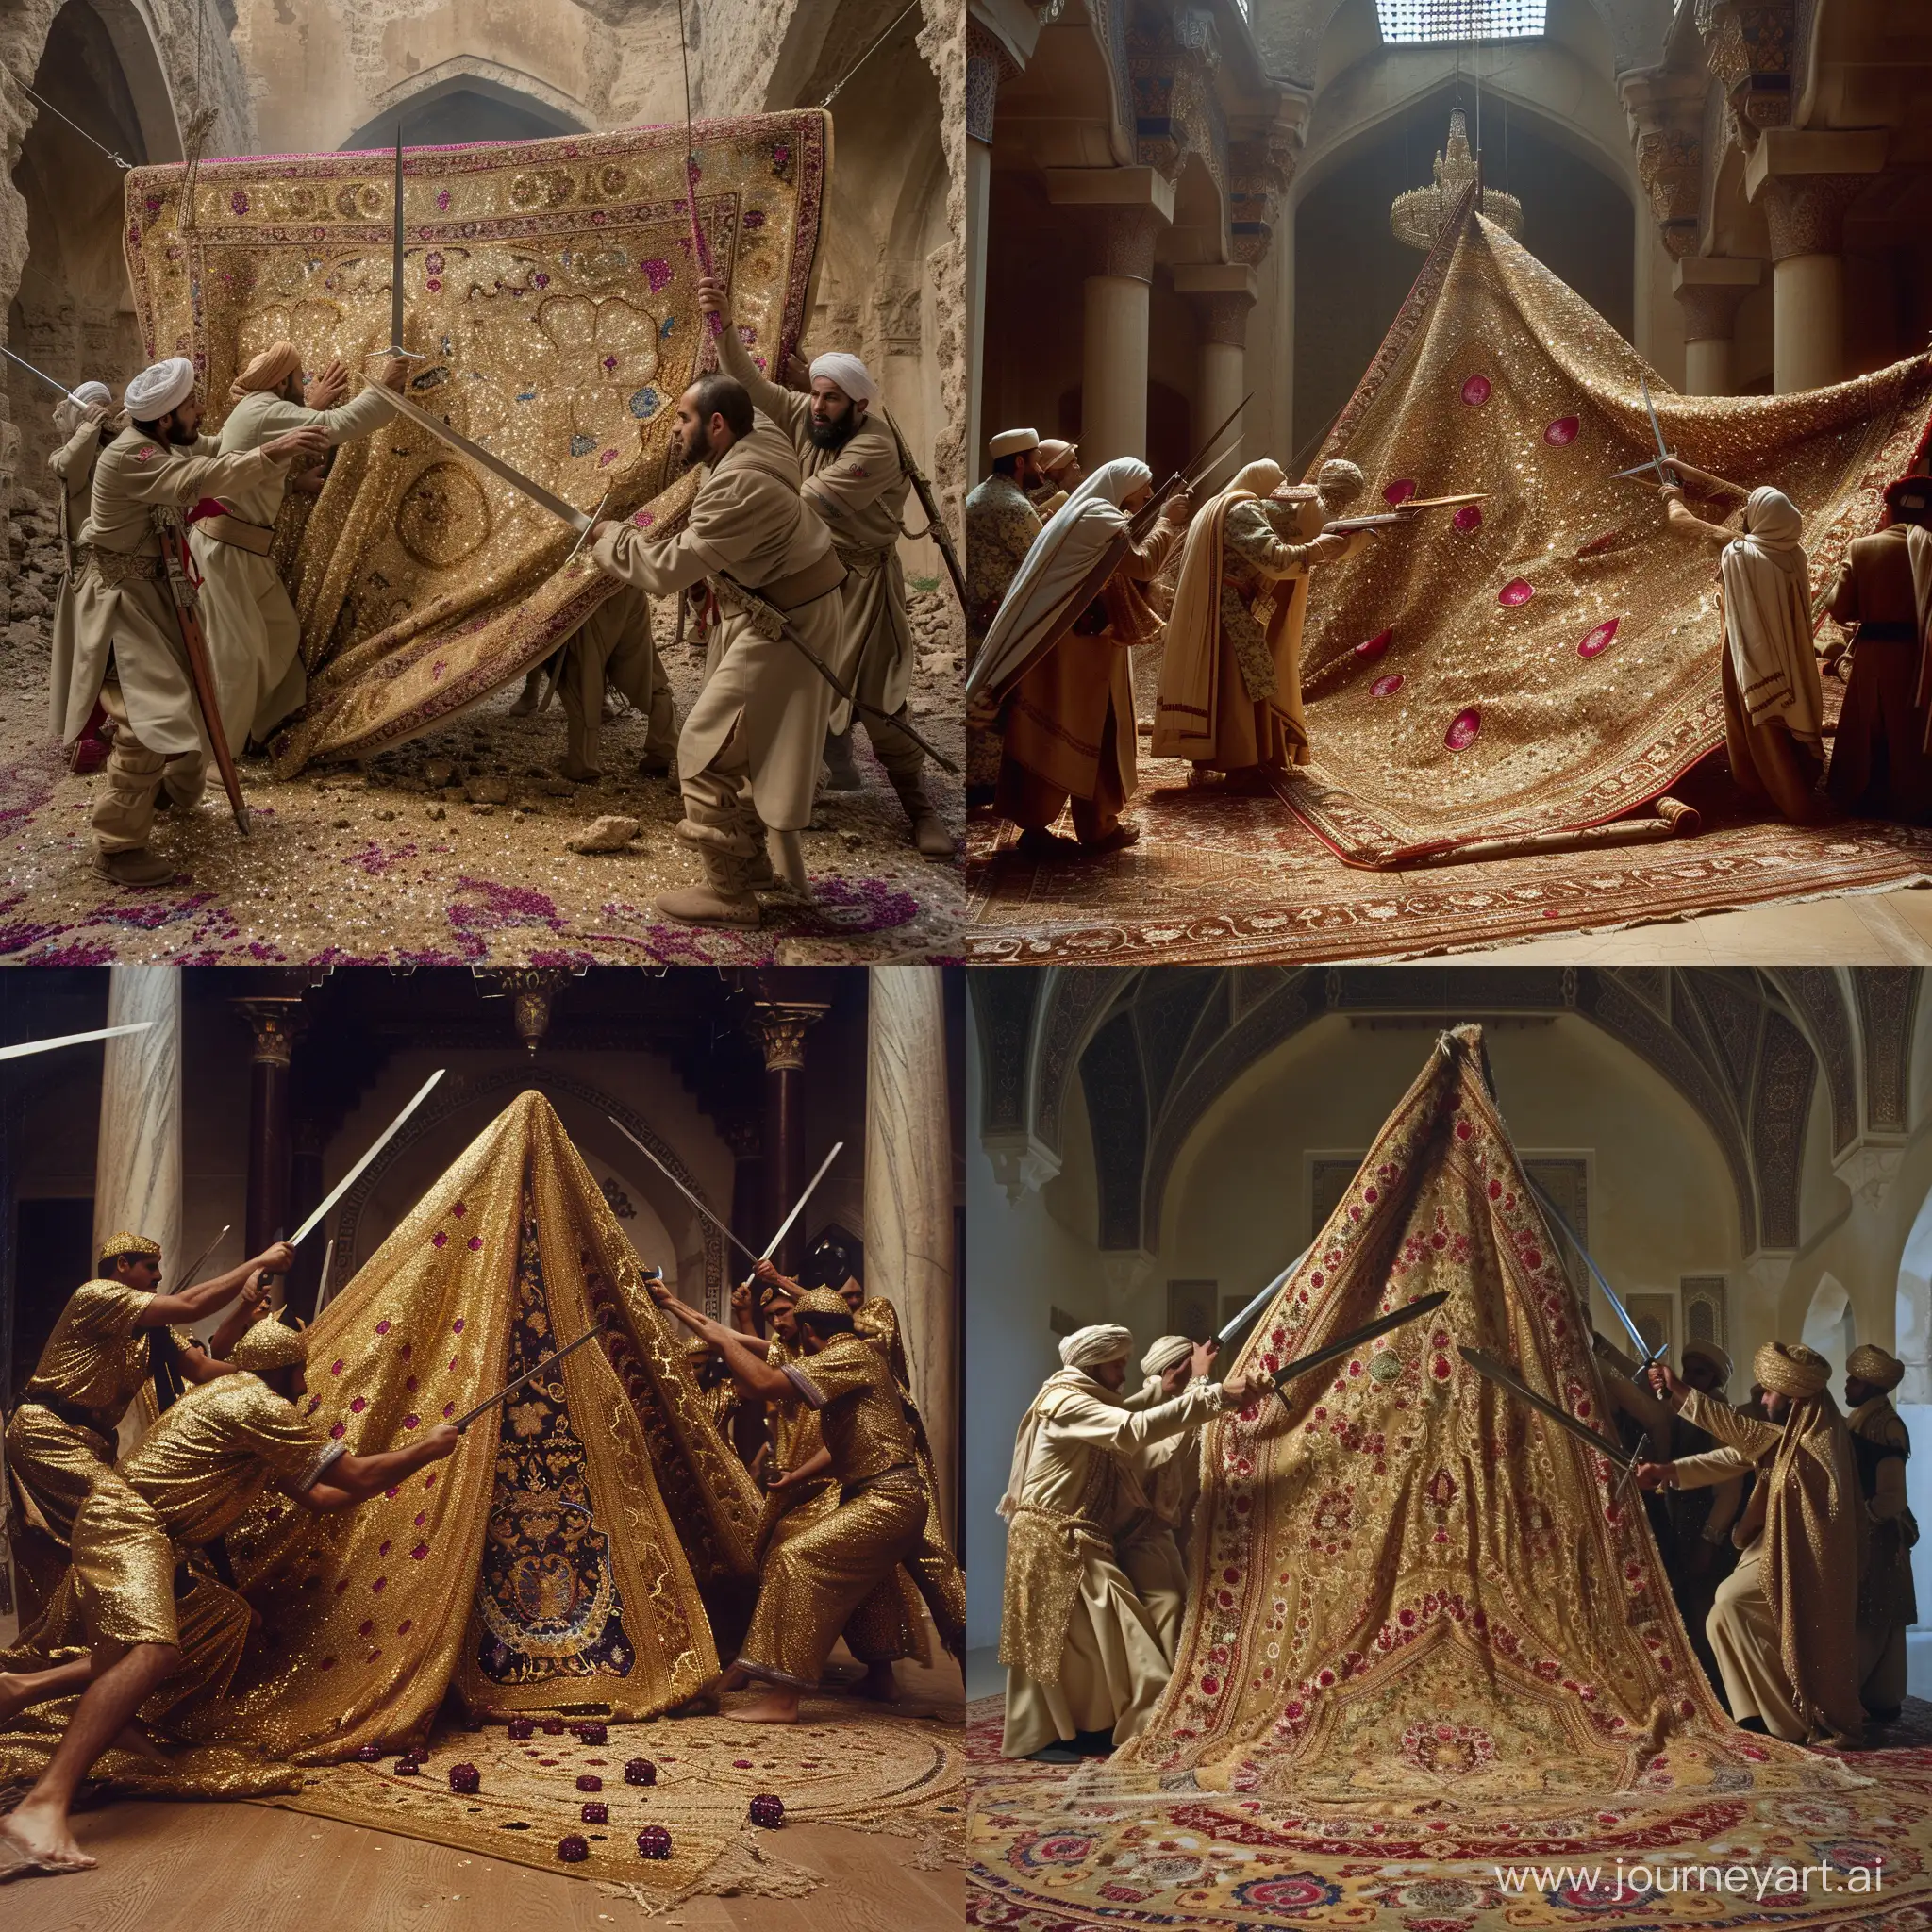 Arab-Soldiers-Pillaging-Golden-Persian-Carpet-in-Bam-Castle